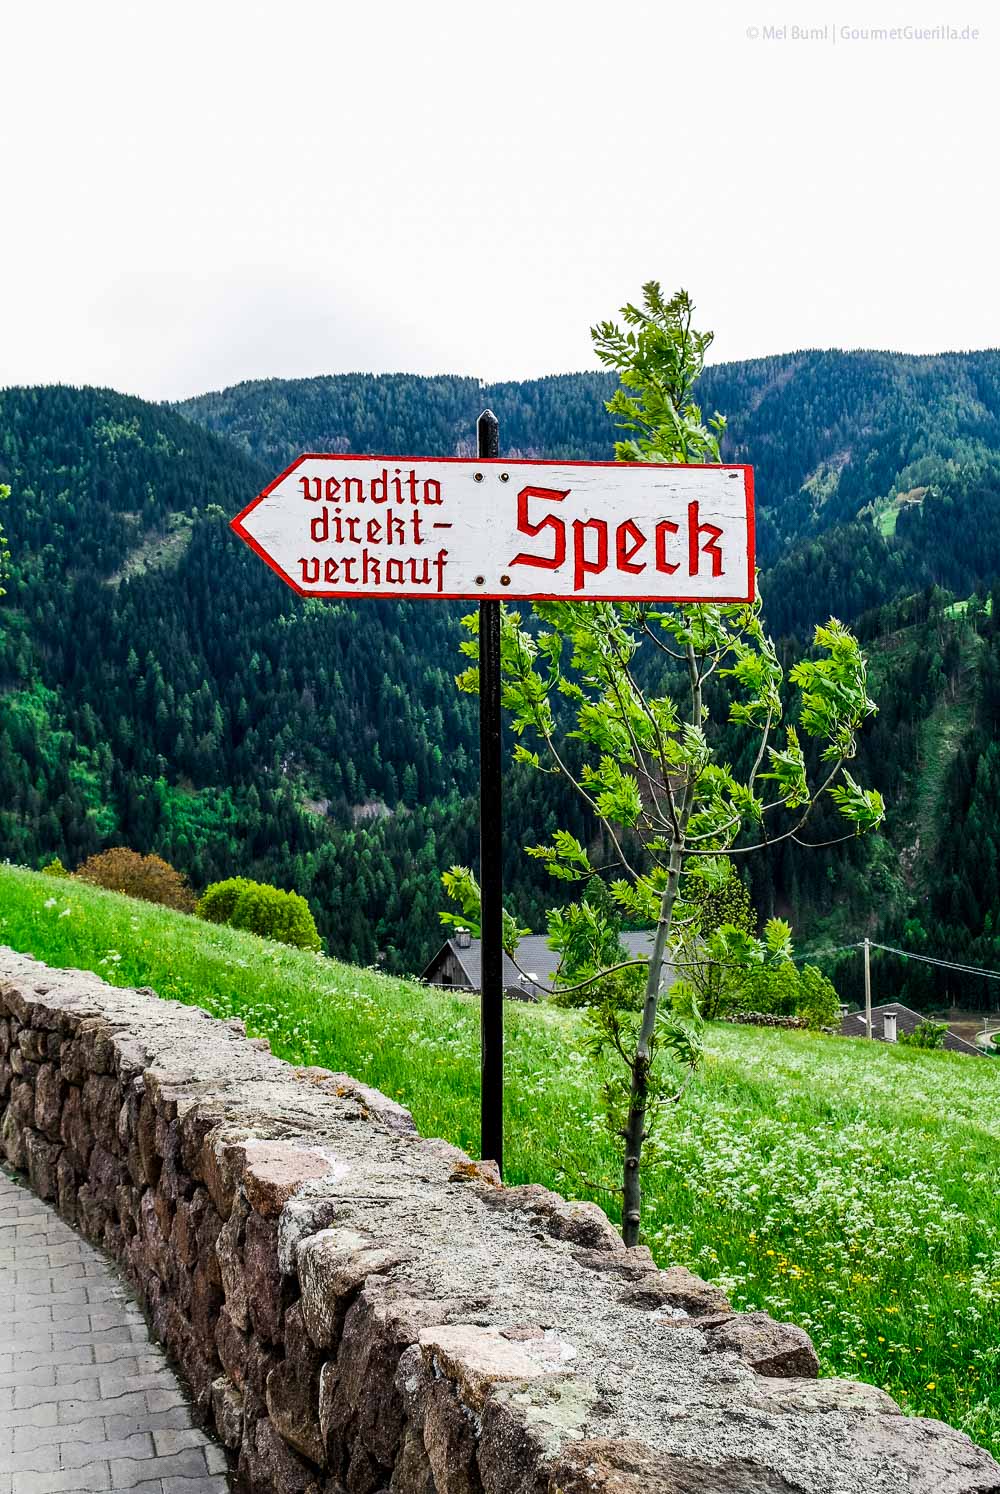 Südtirol und Südtiroler Speck | GourmetGuerilla.de